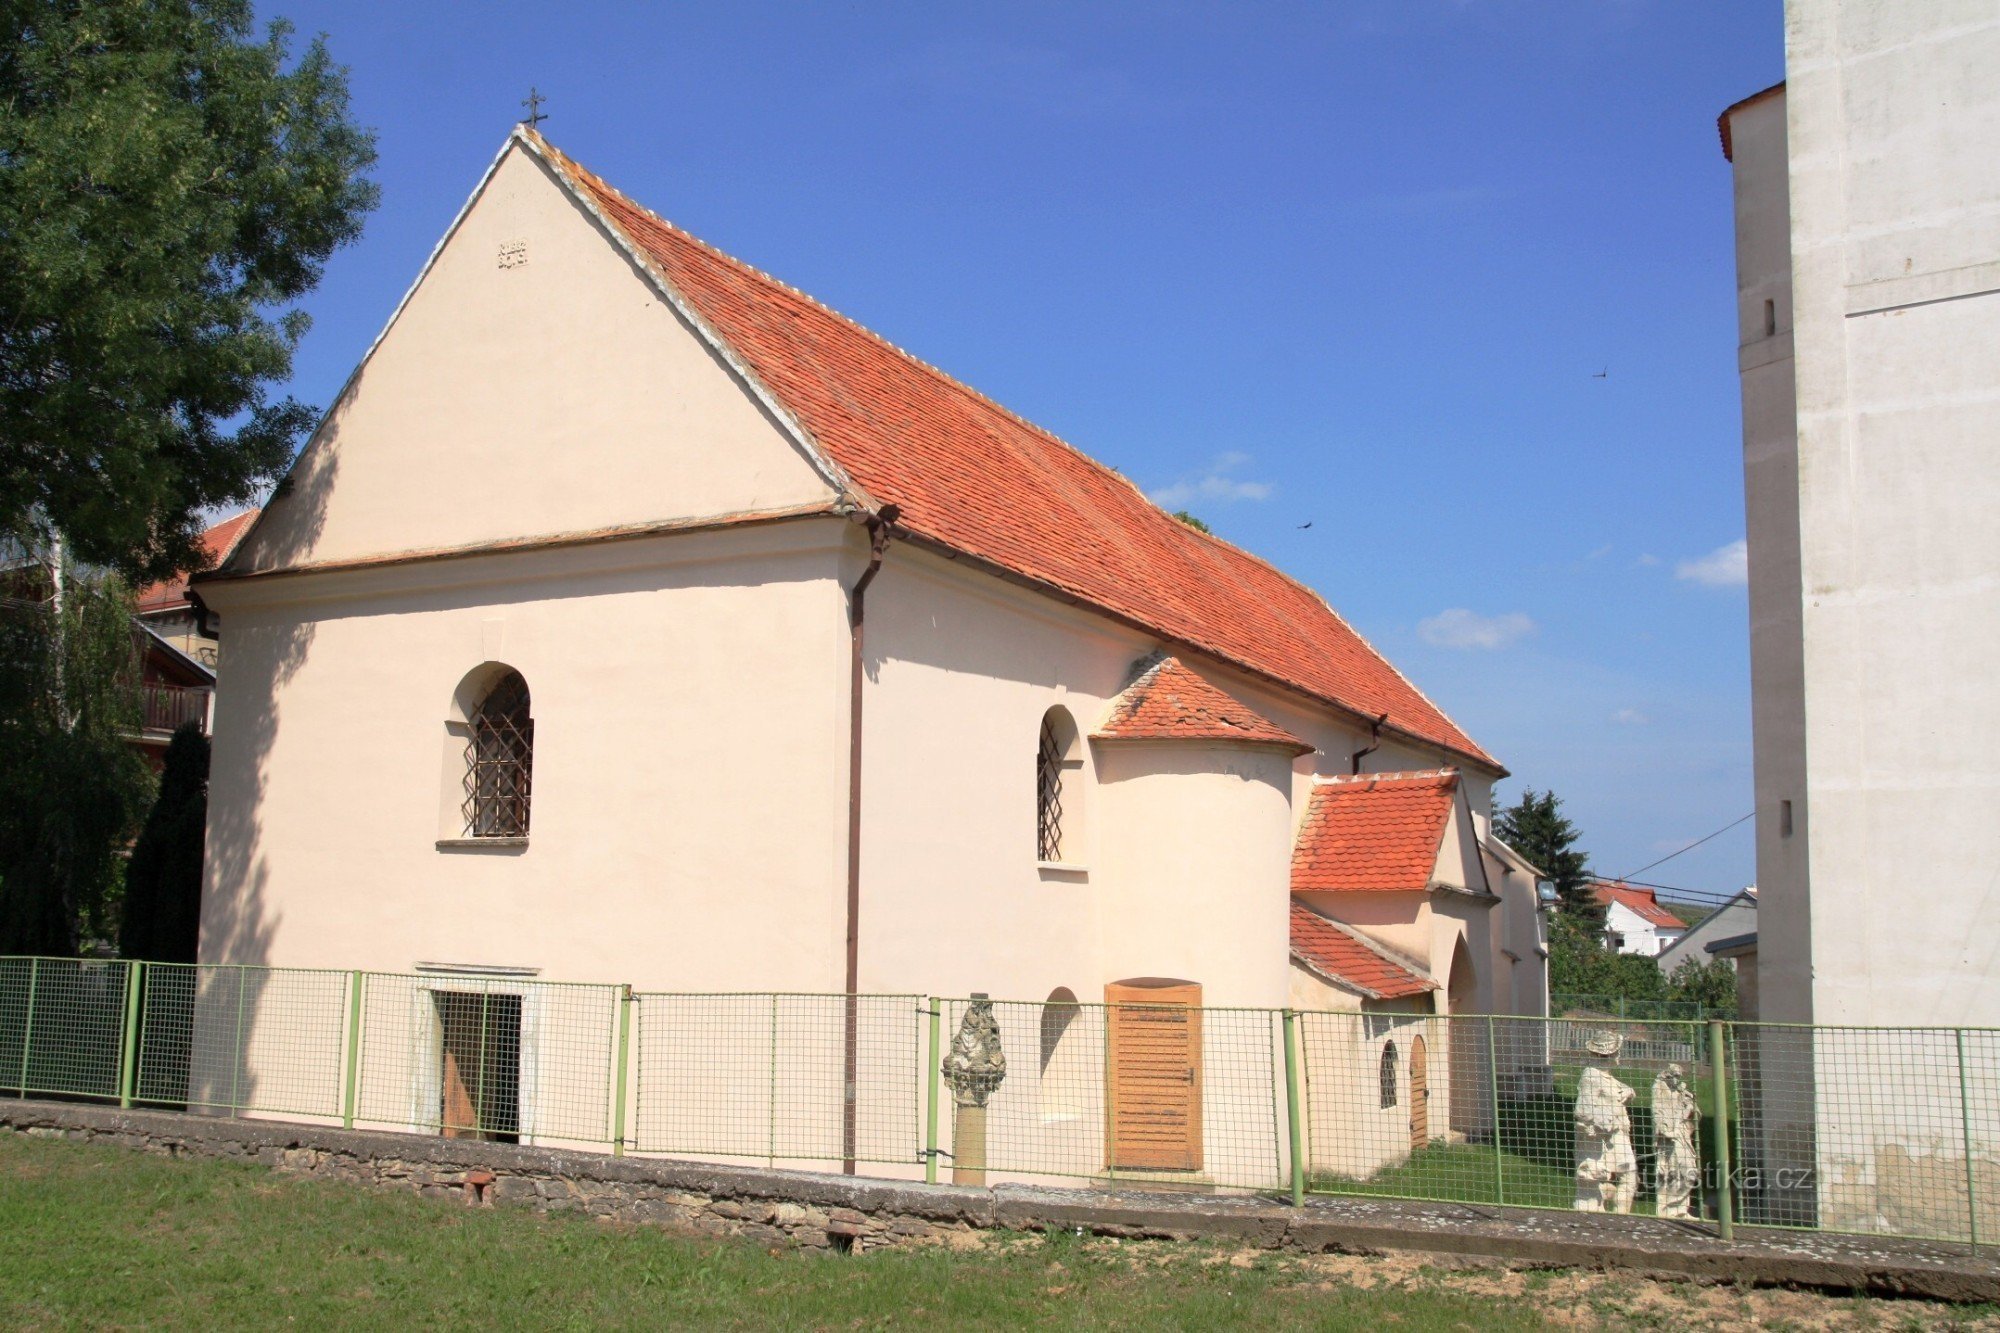 Přítluky - Kirche St. Märkte aus dem Westen